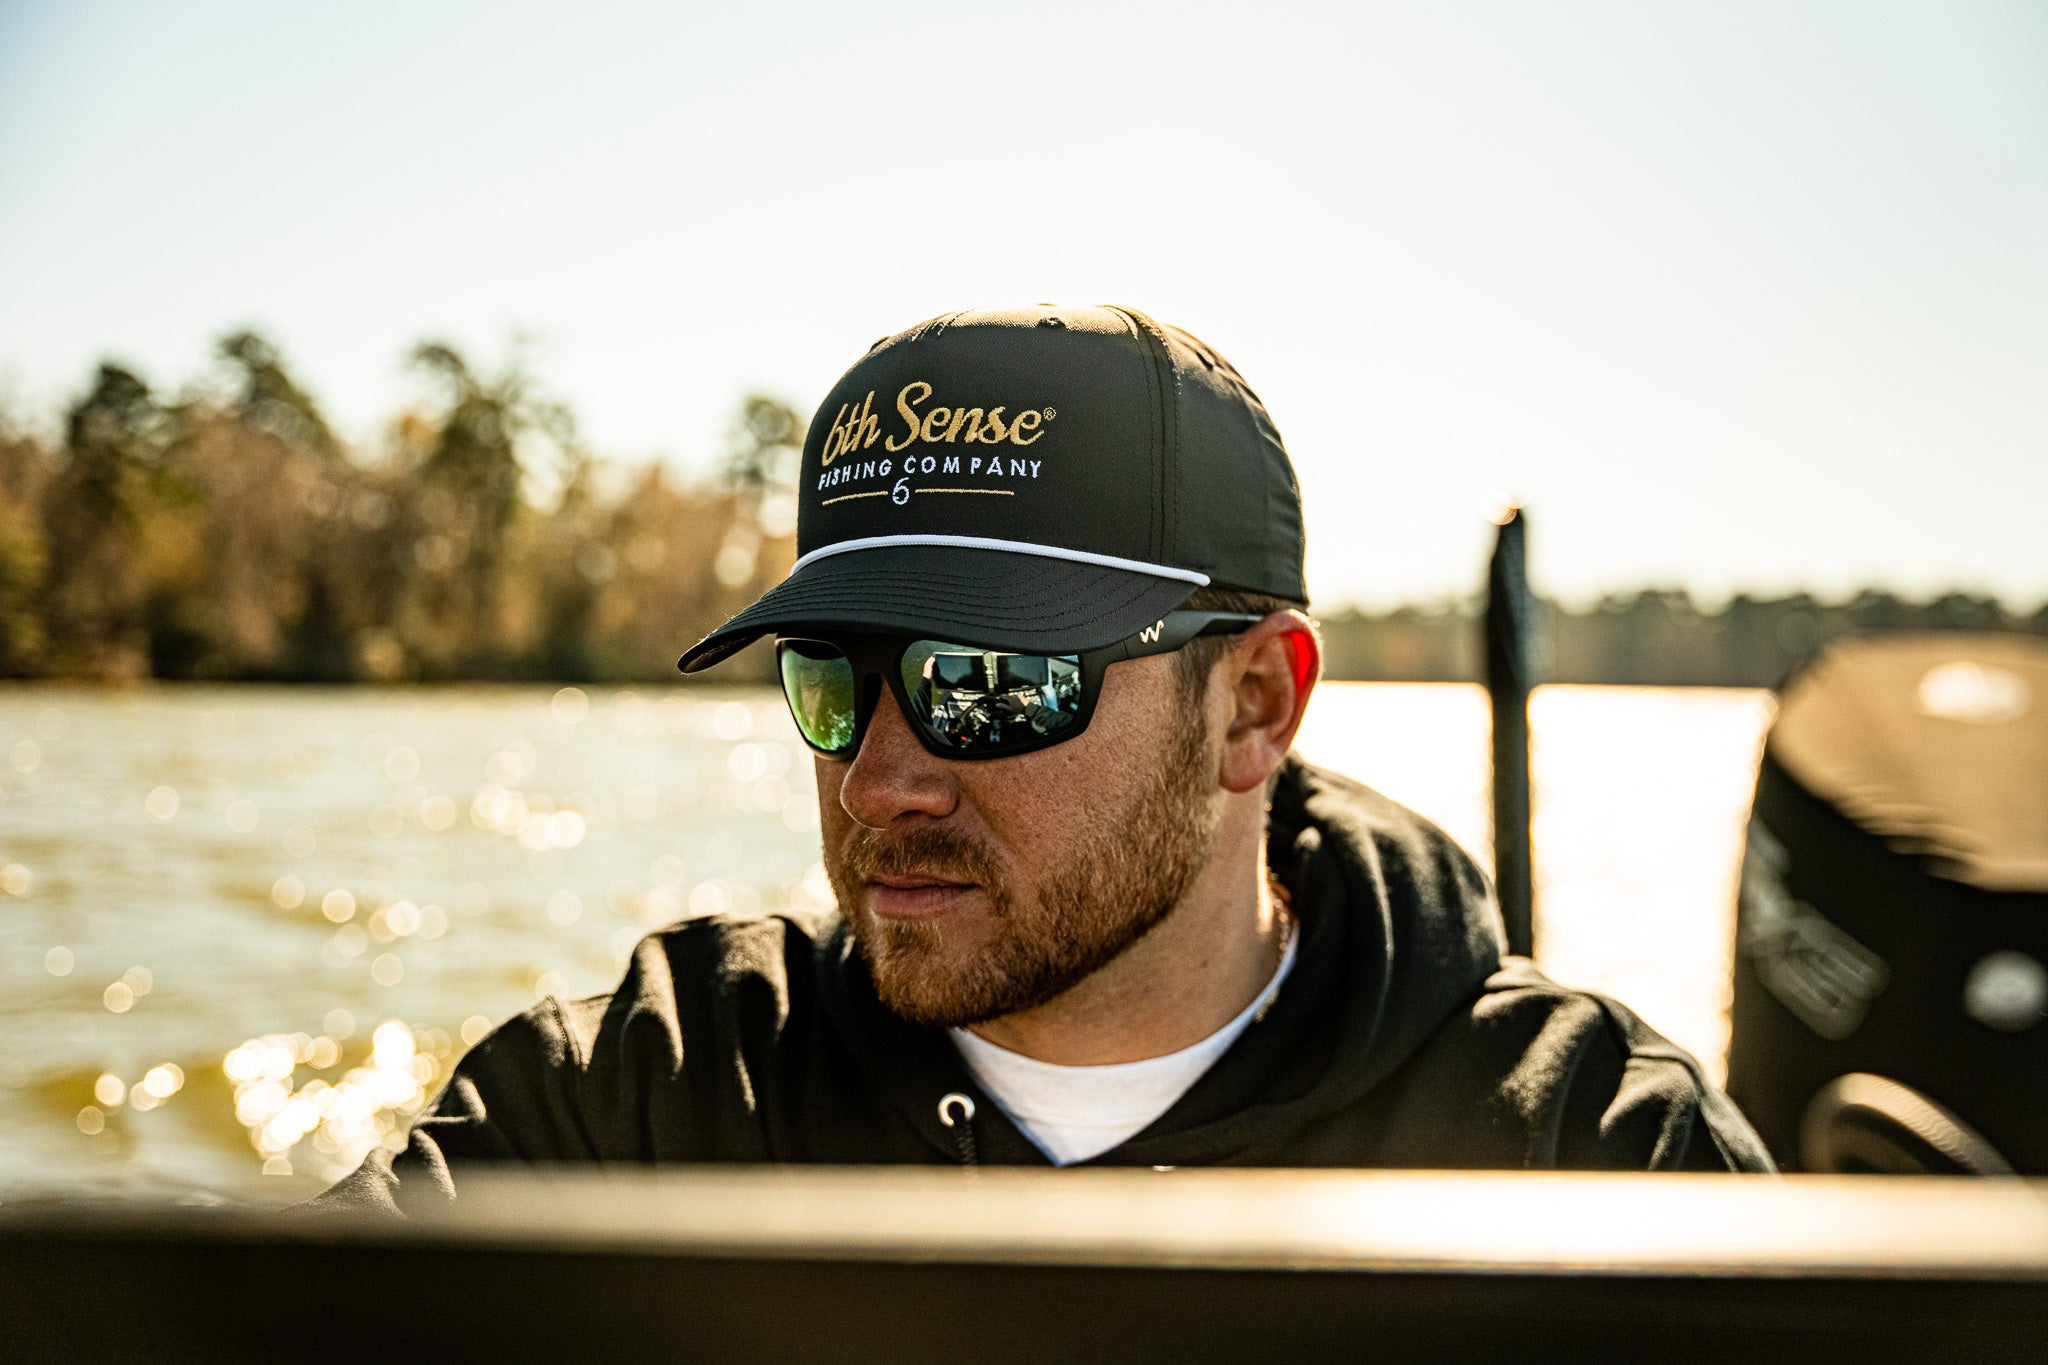 6th Sense Fishing- Premium SnapBack Hats - The Gold Standard